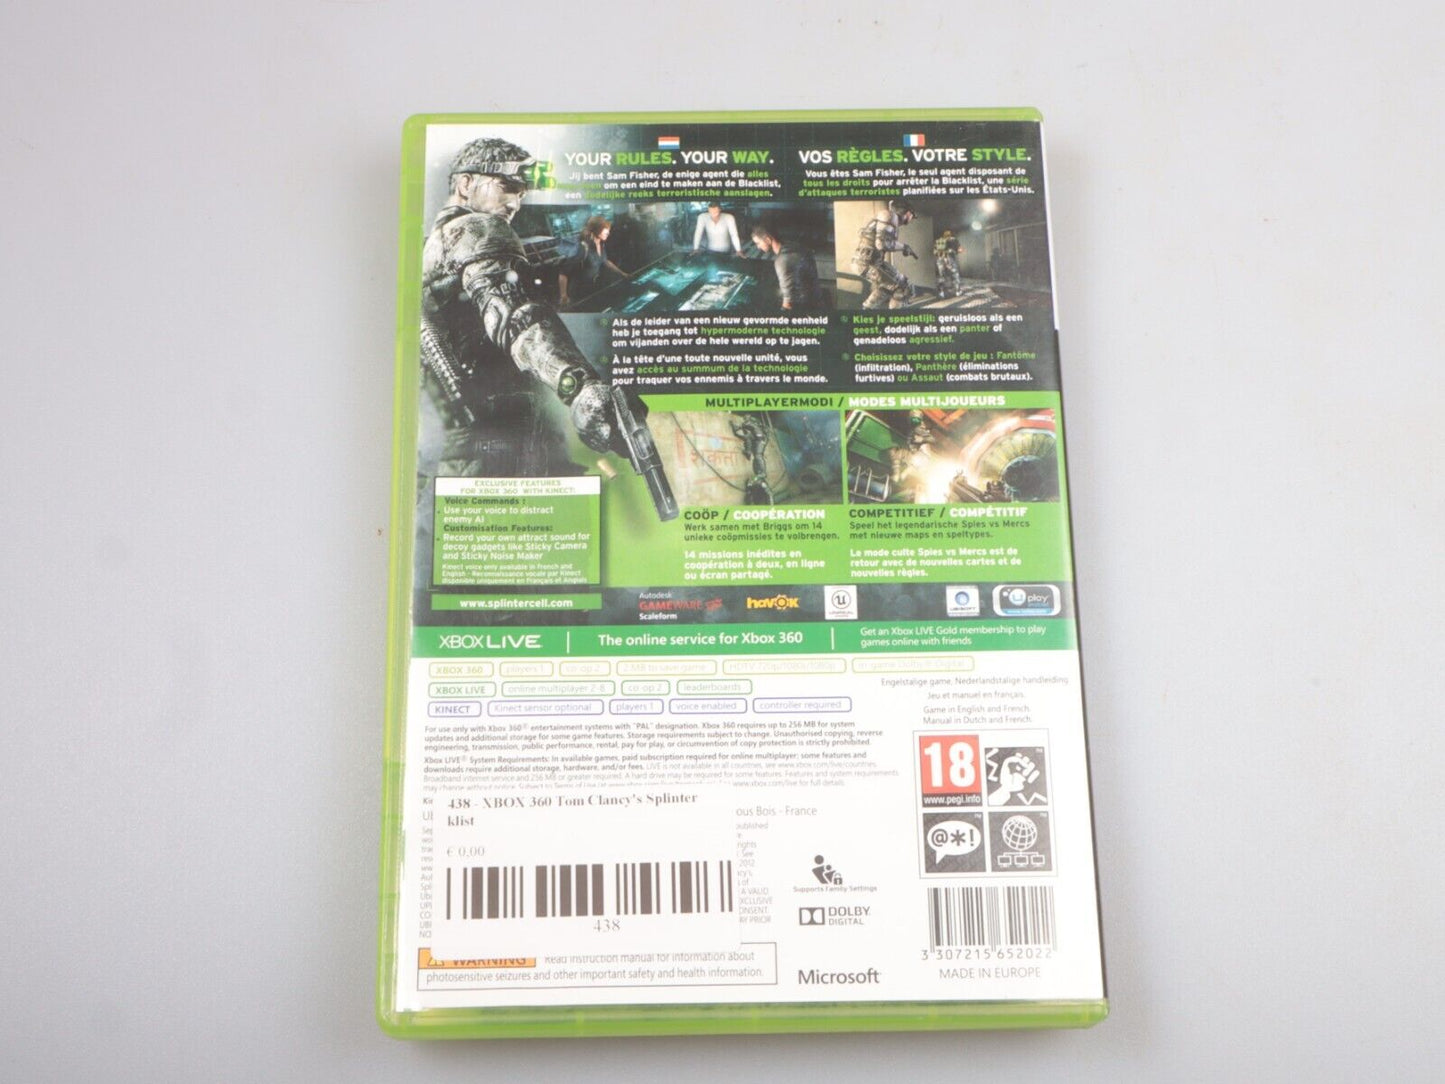 Xbox 360 | Tom Clancy's Splinter Cell Blacklist